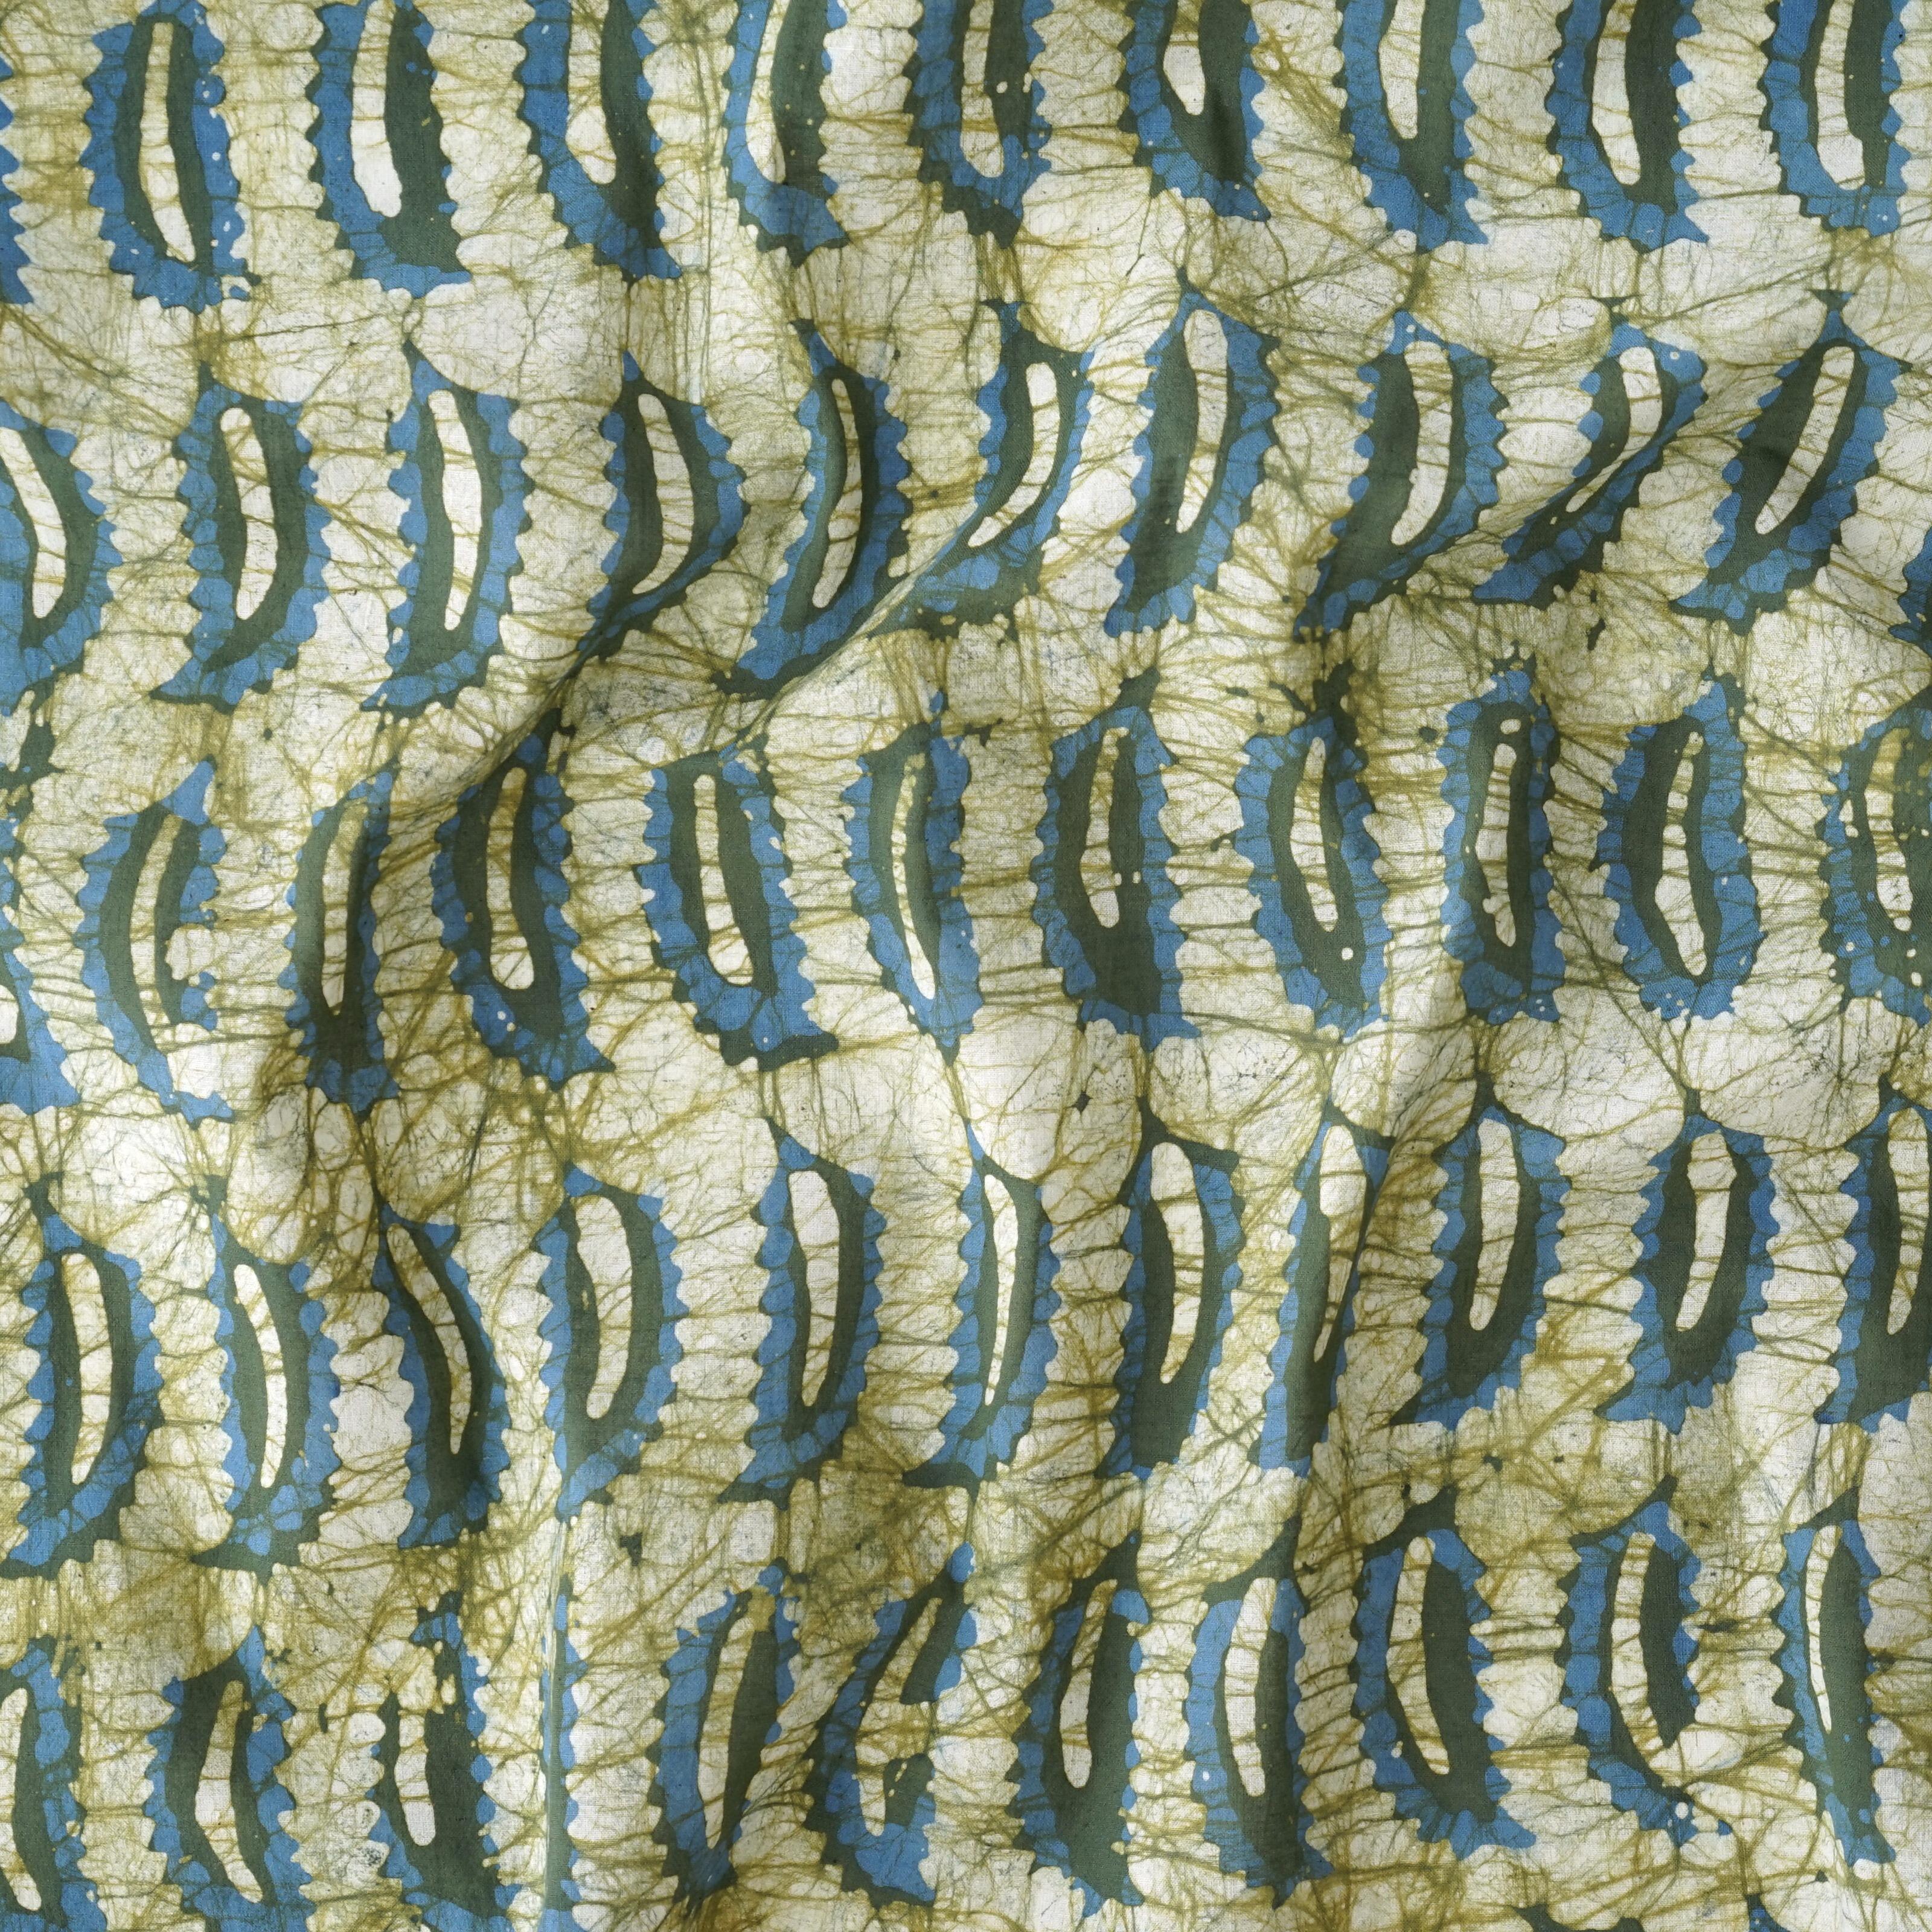 Block-Printed Batik Fabric - Cotton Cloth - Reactive Dyes - Banana Leaves Design - Contrast